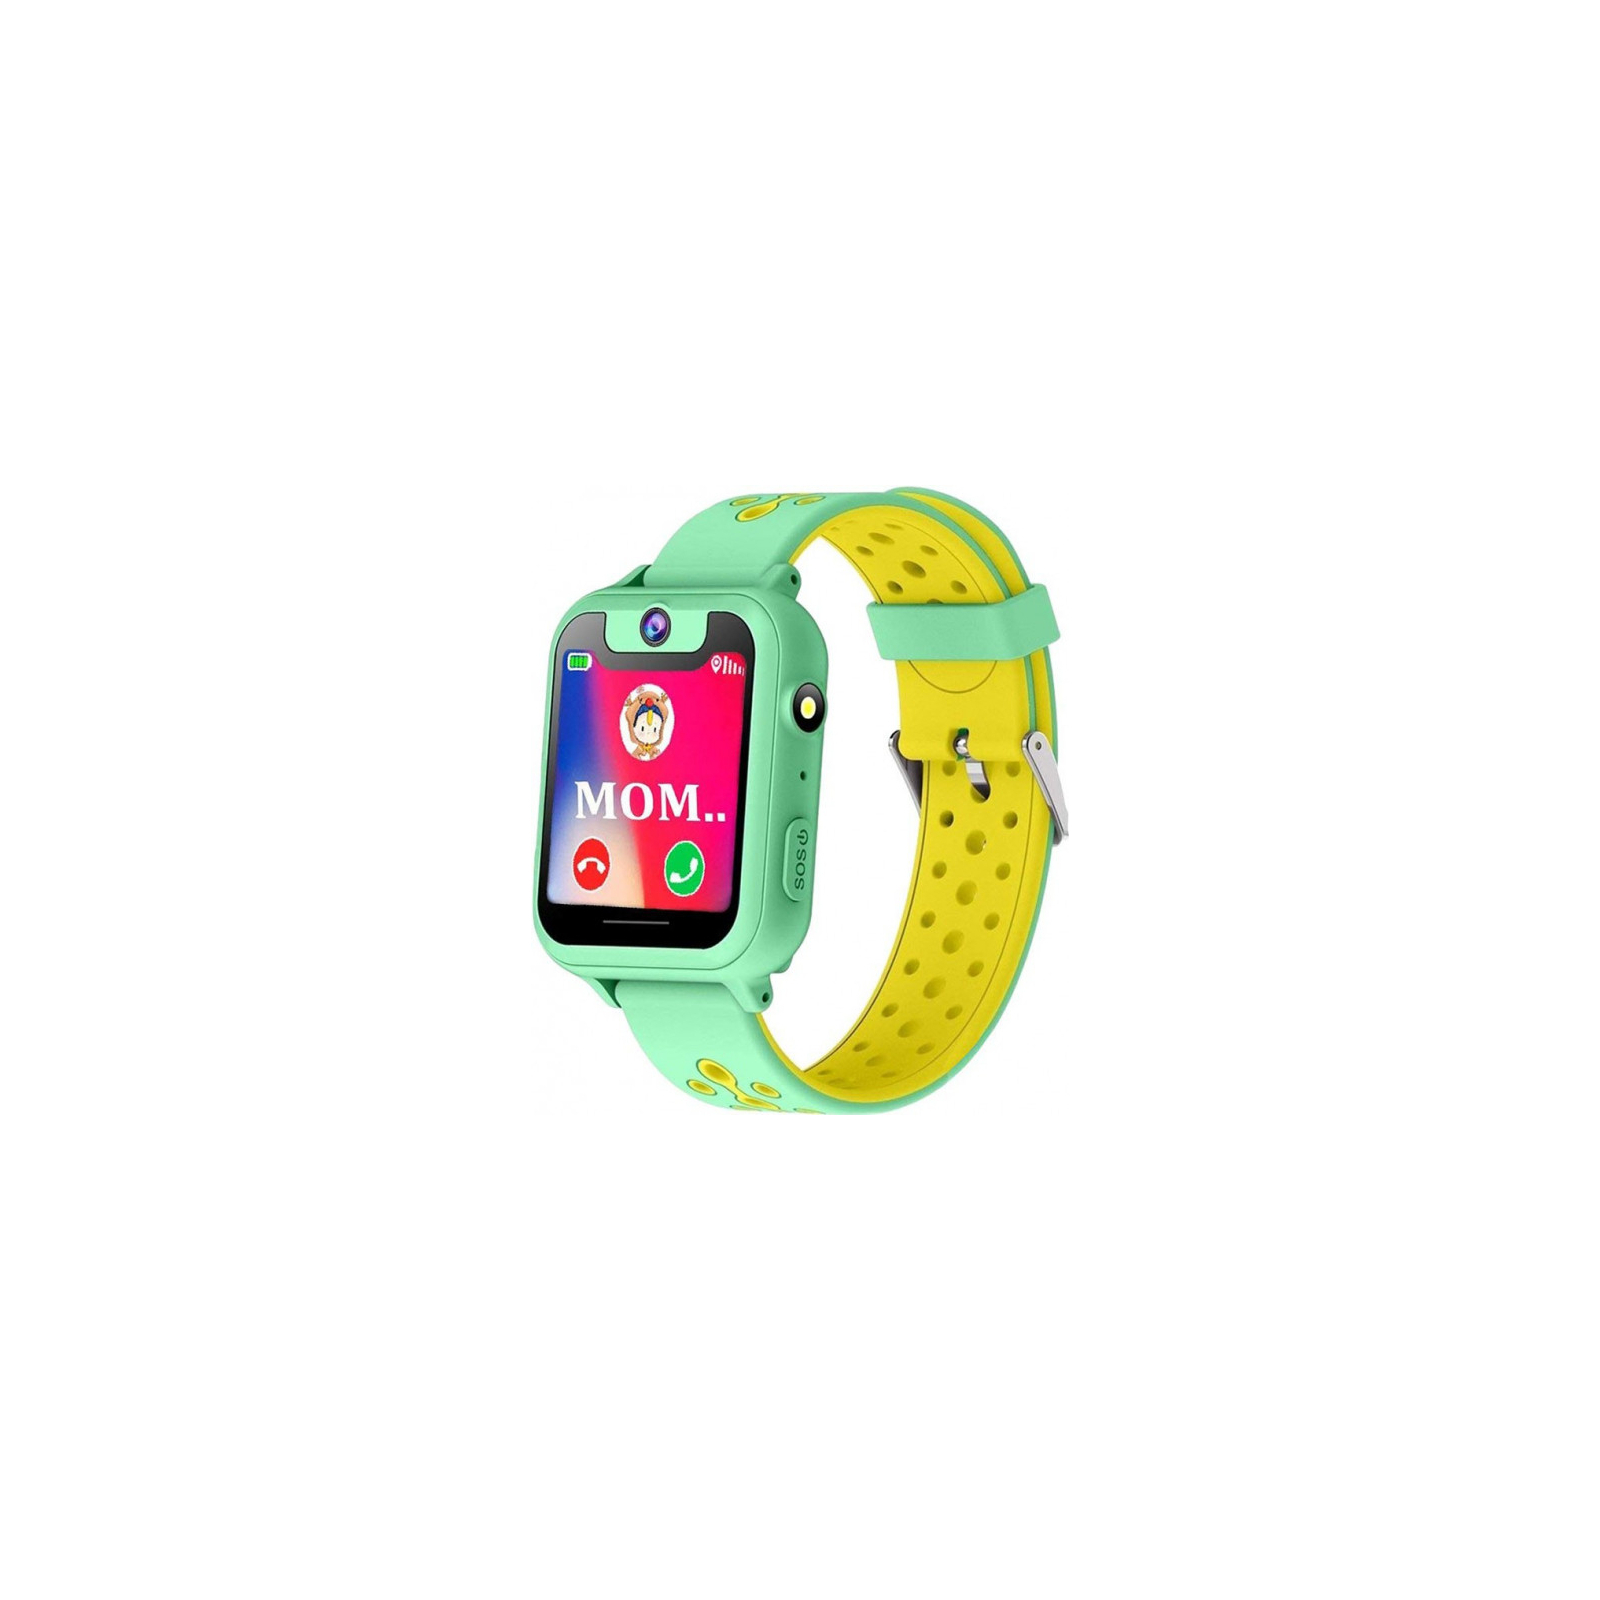 Смарт-часы UWatch S6 Kid smart watch Pink (F_85713) изображение 2